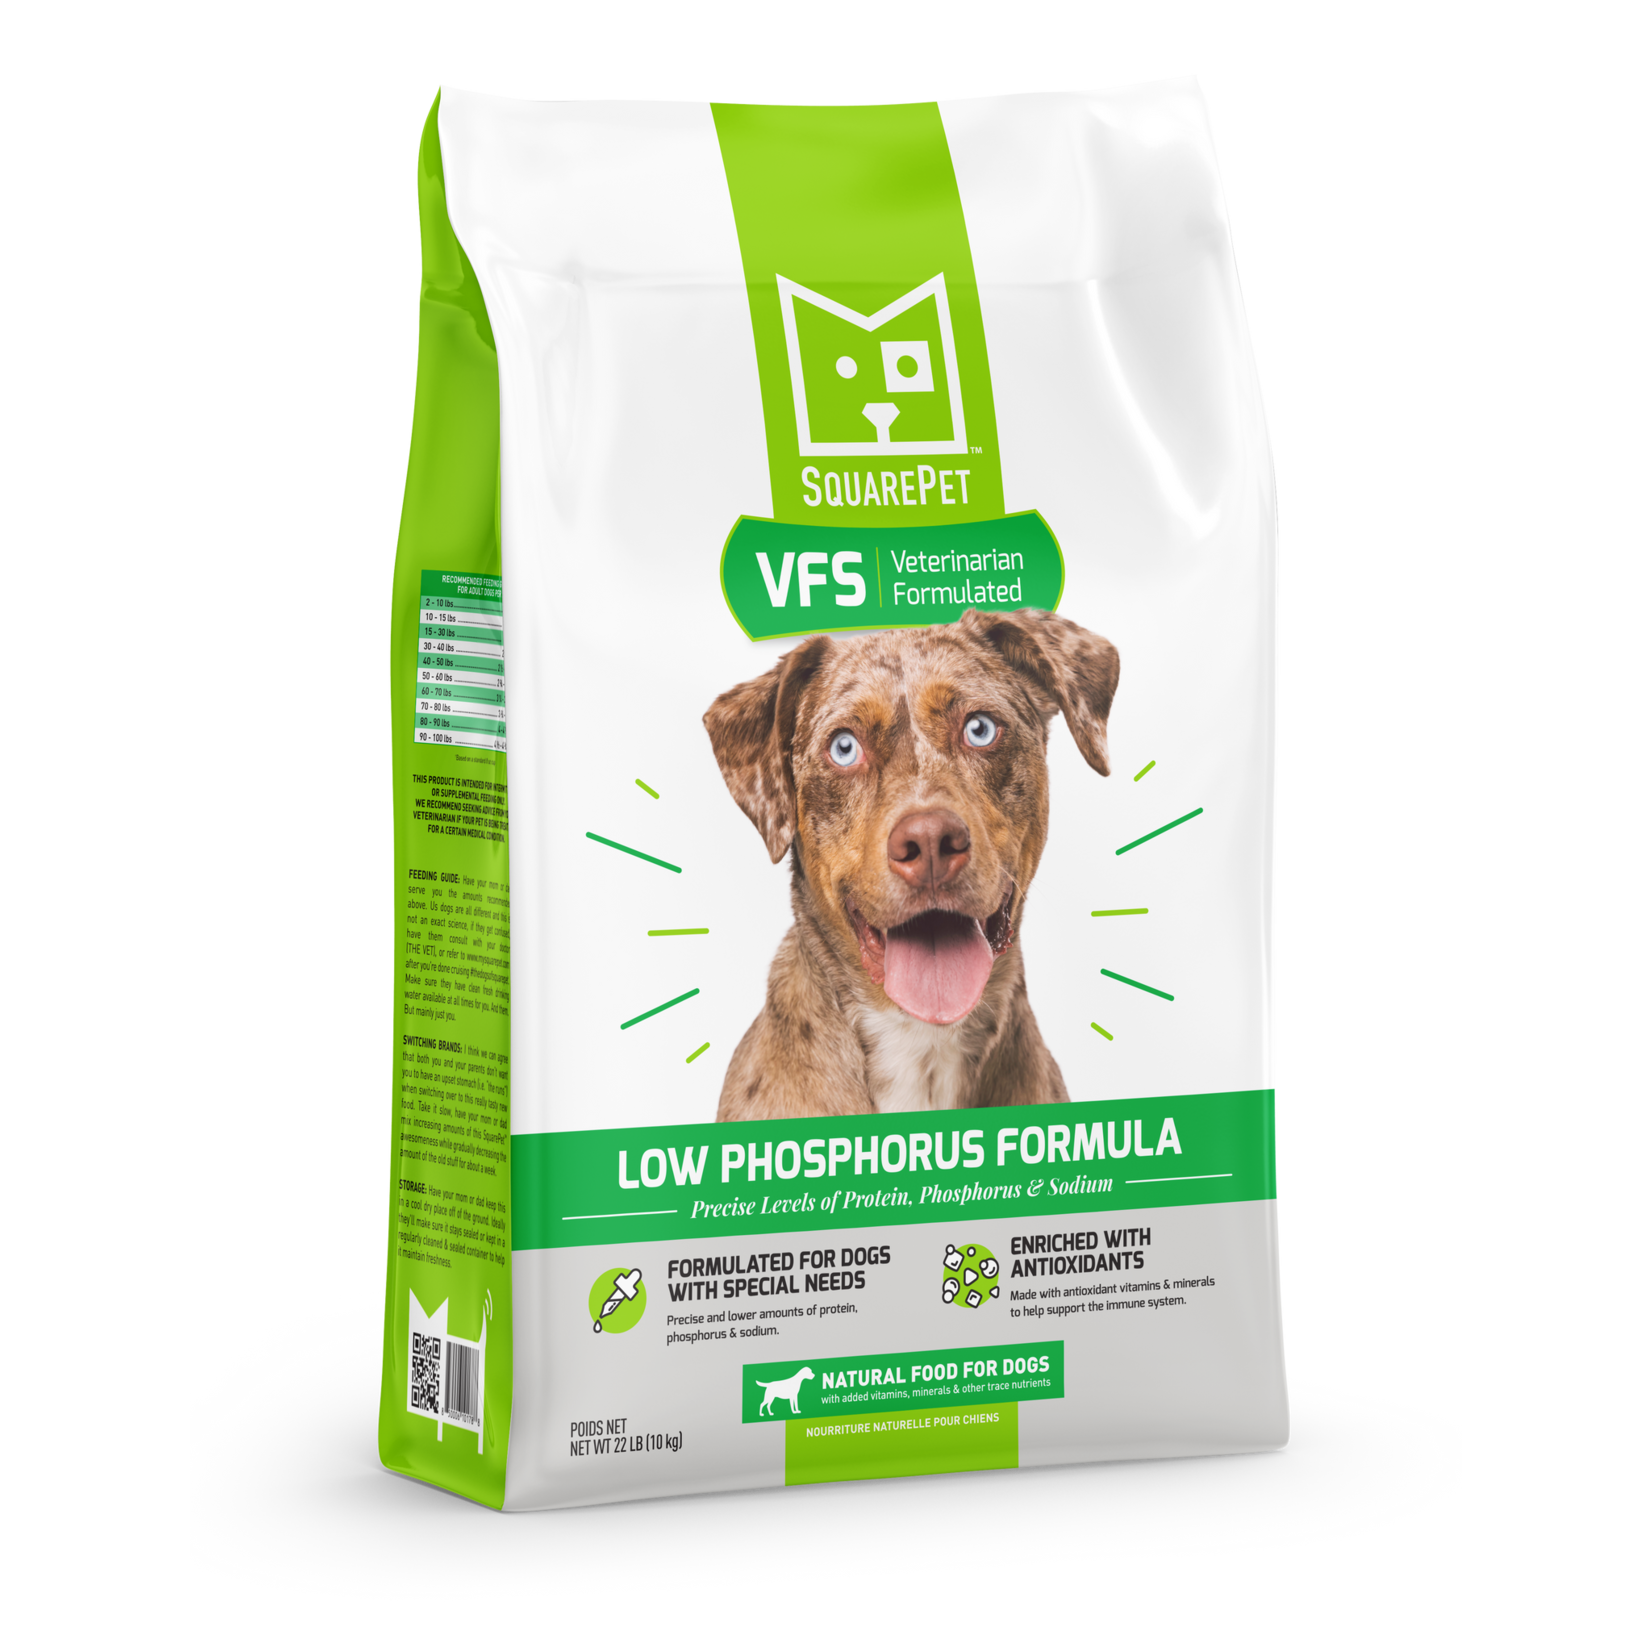 SquarePet VFS Low Phosphorus Formula Dog Food